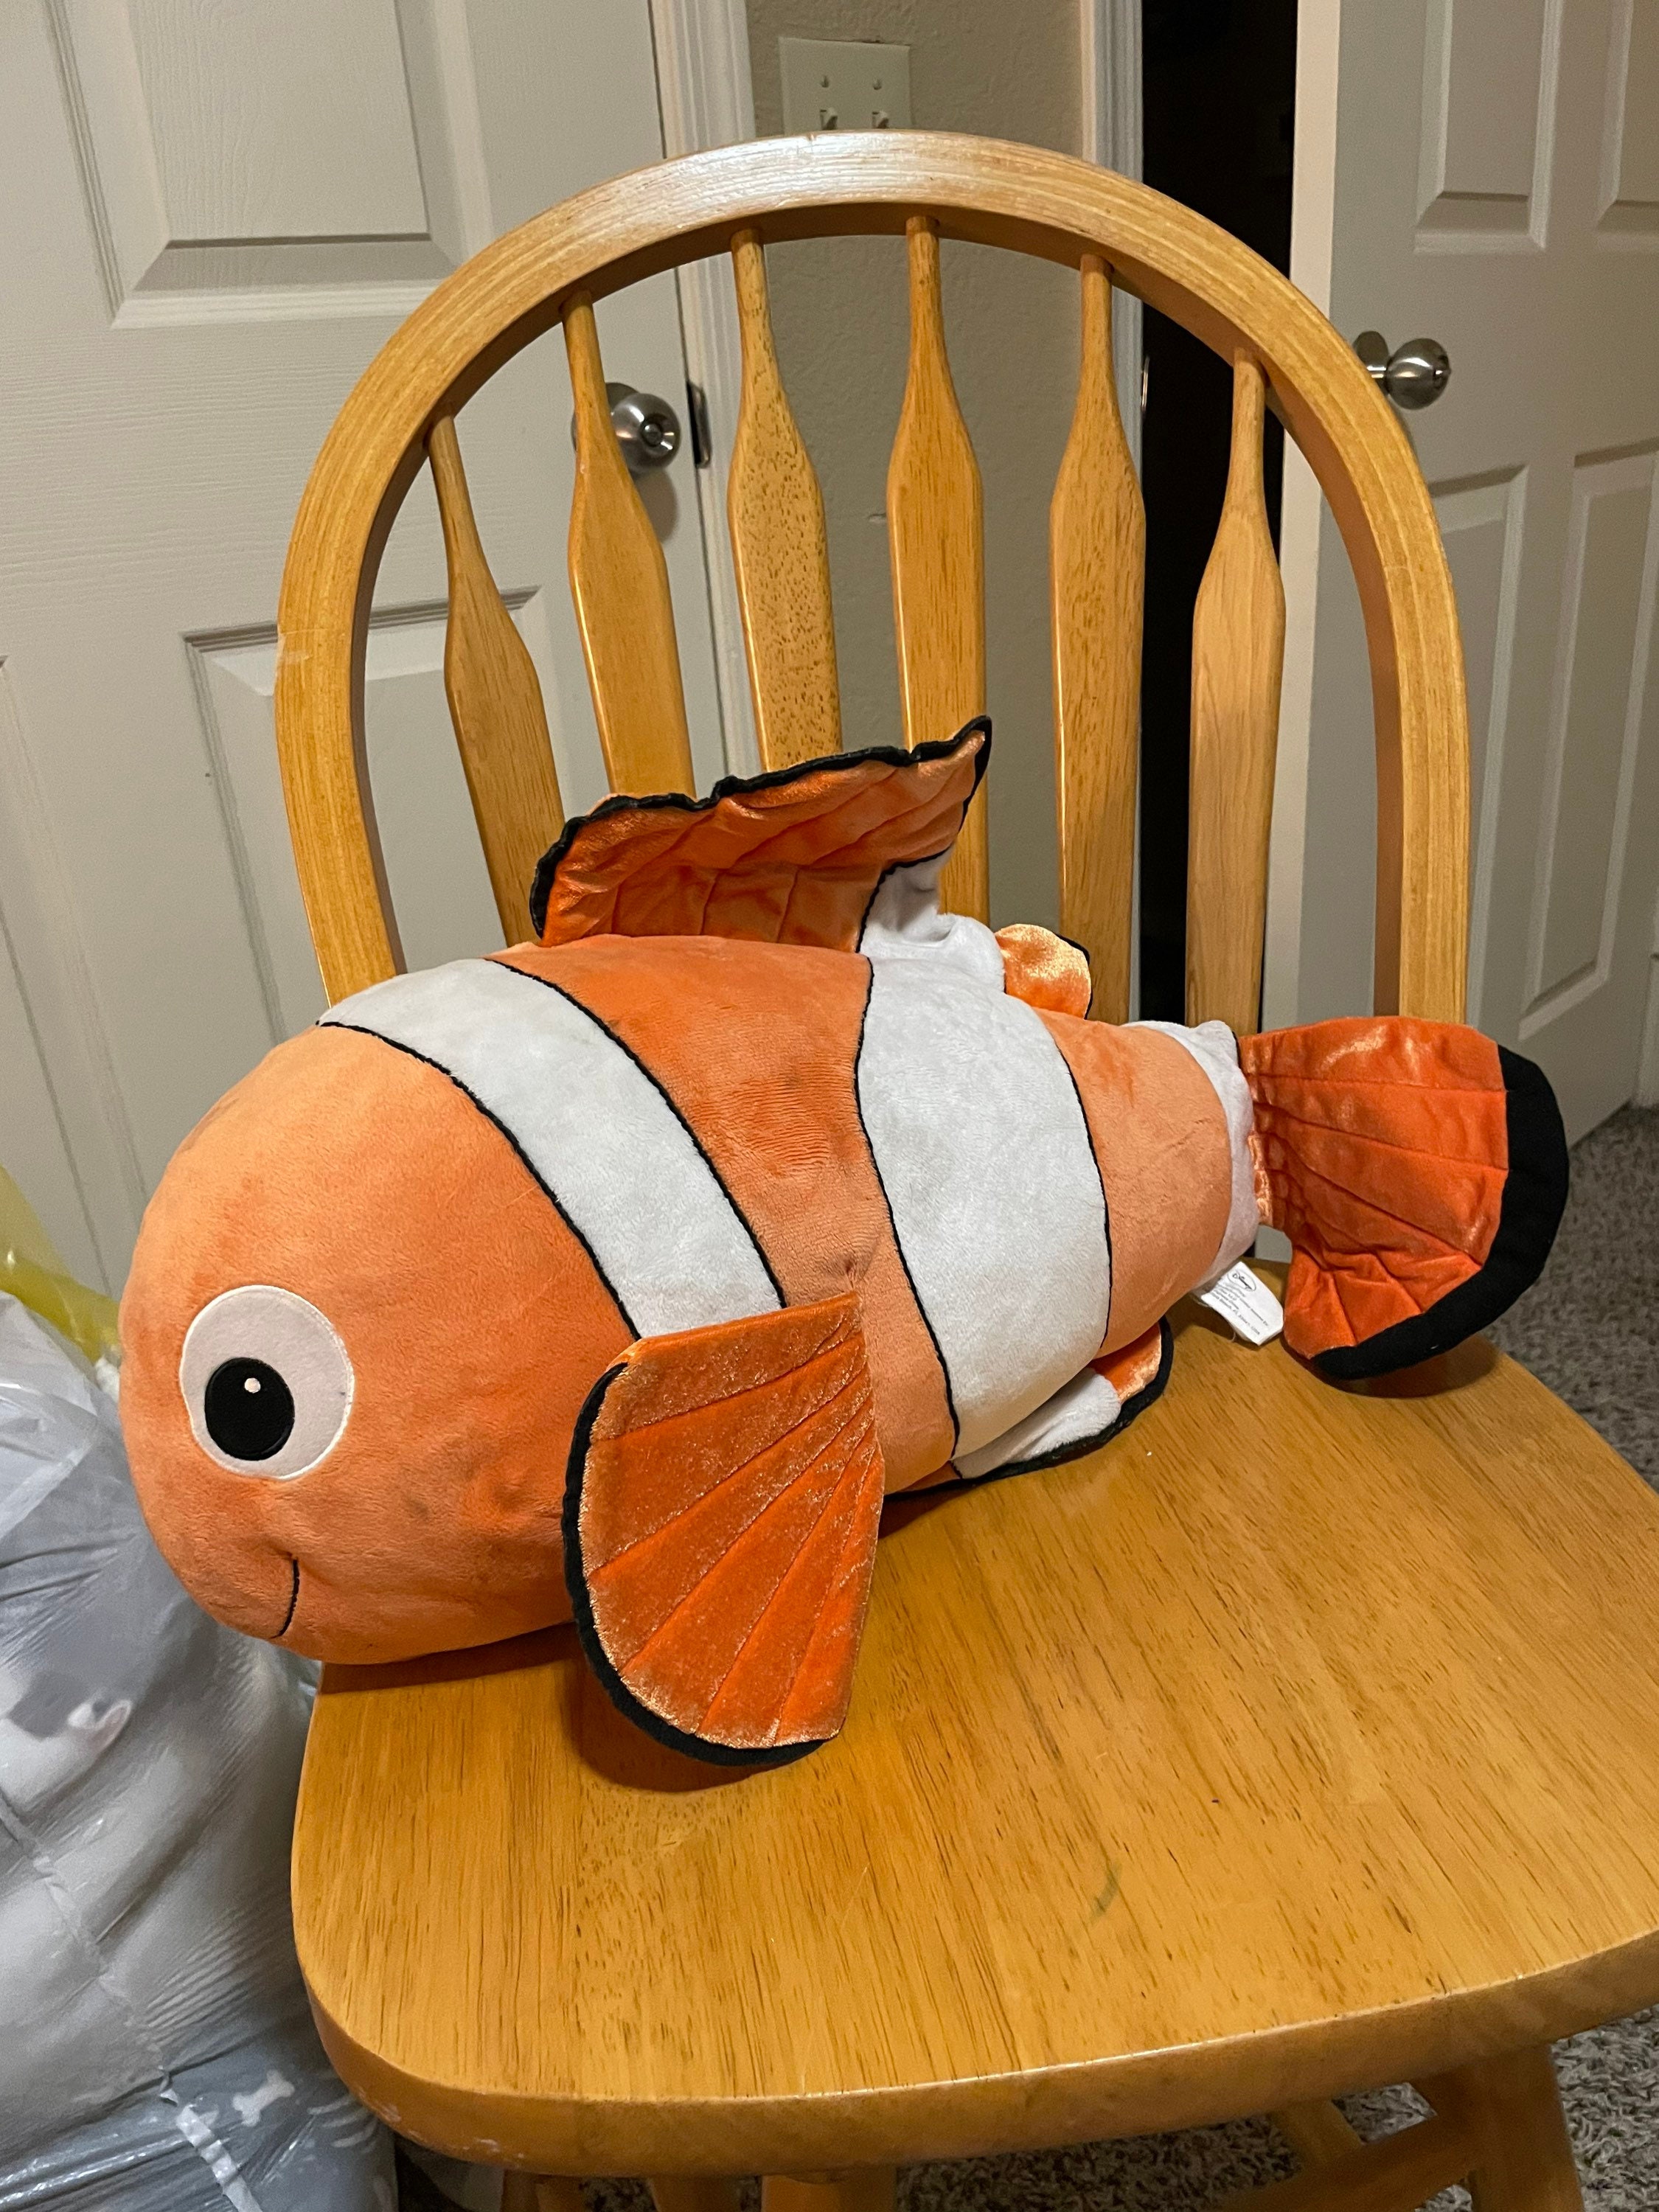 Large Finding Nemo Stuffed Animal Plush Toy From Disney - Etsy